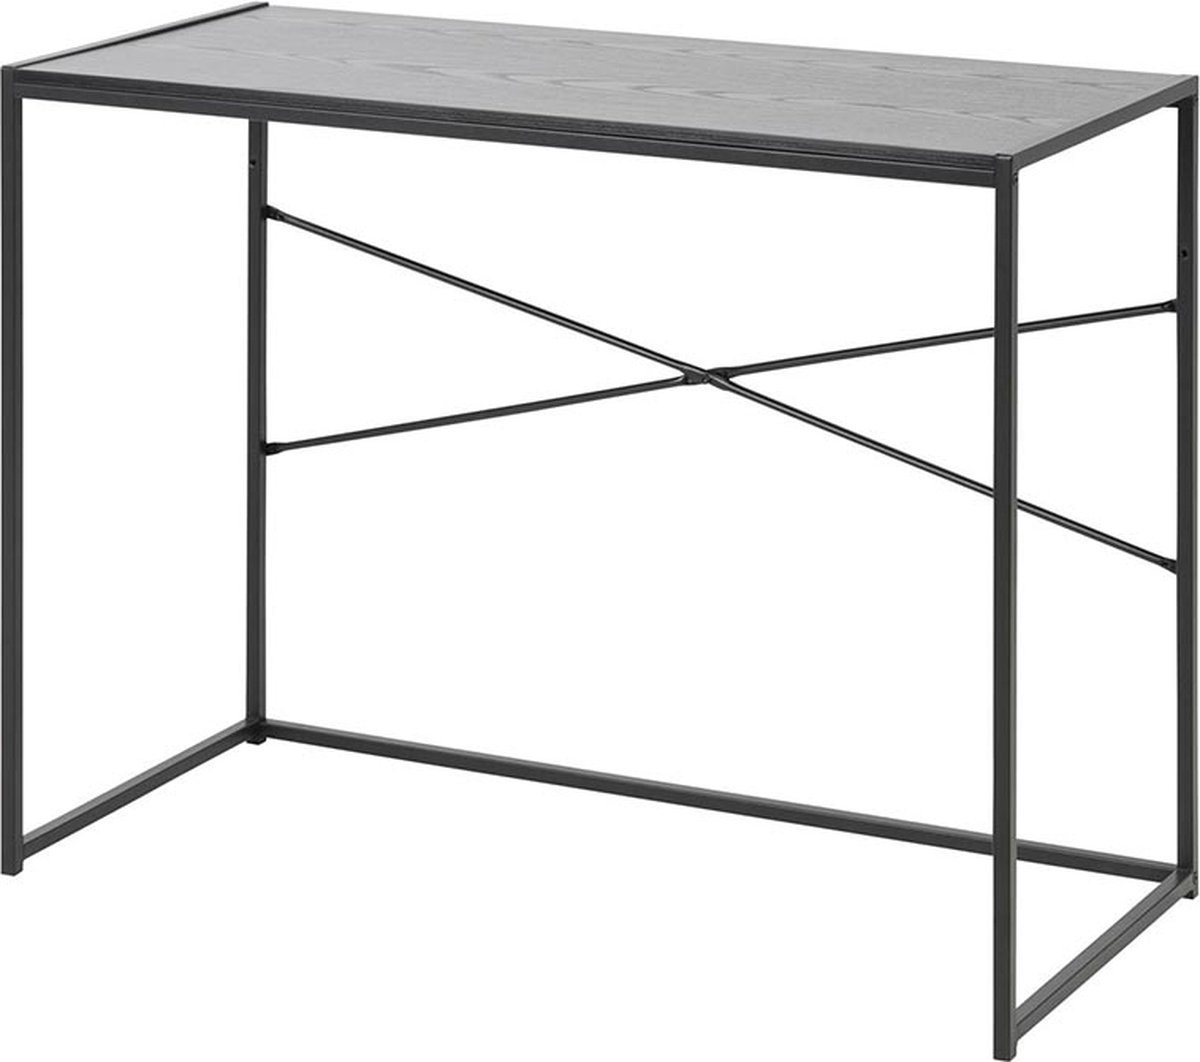 Vic houten bureau zwart - 100 x 45 cm